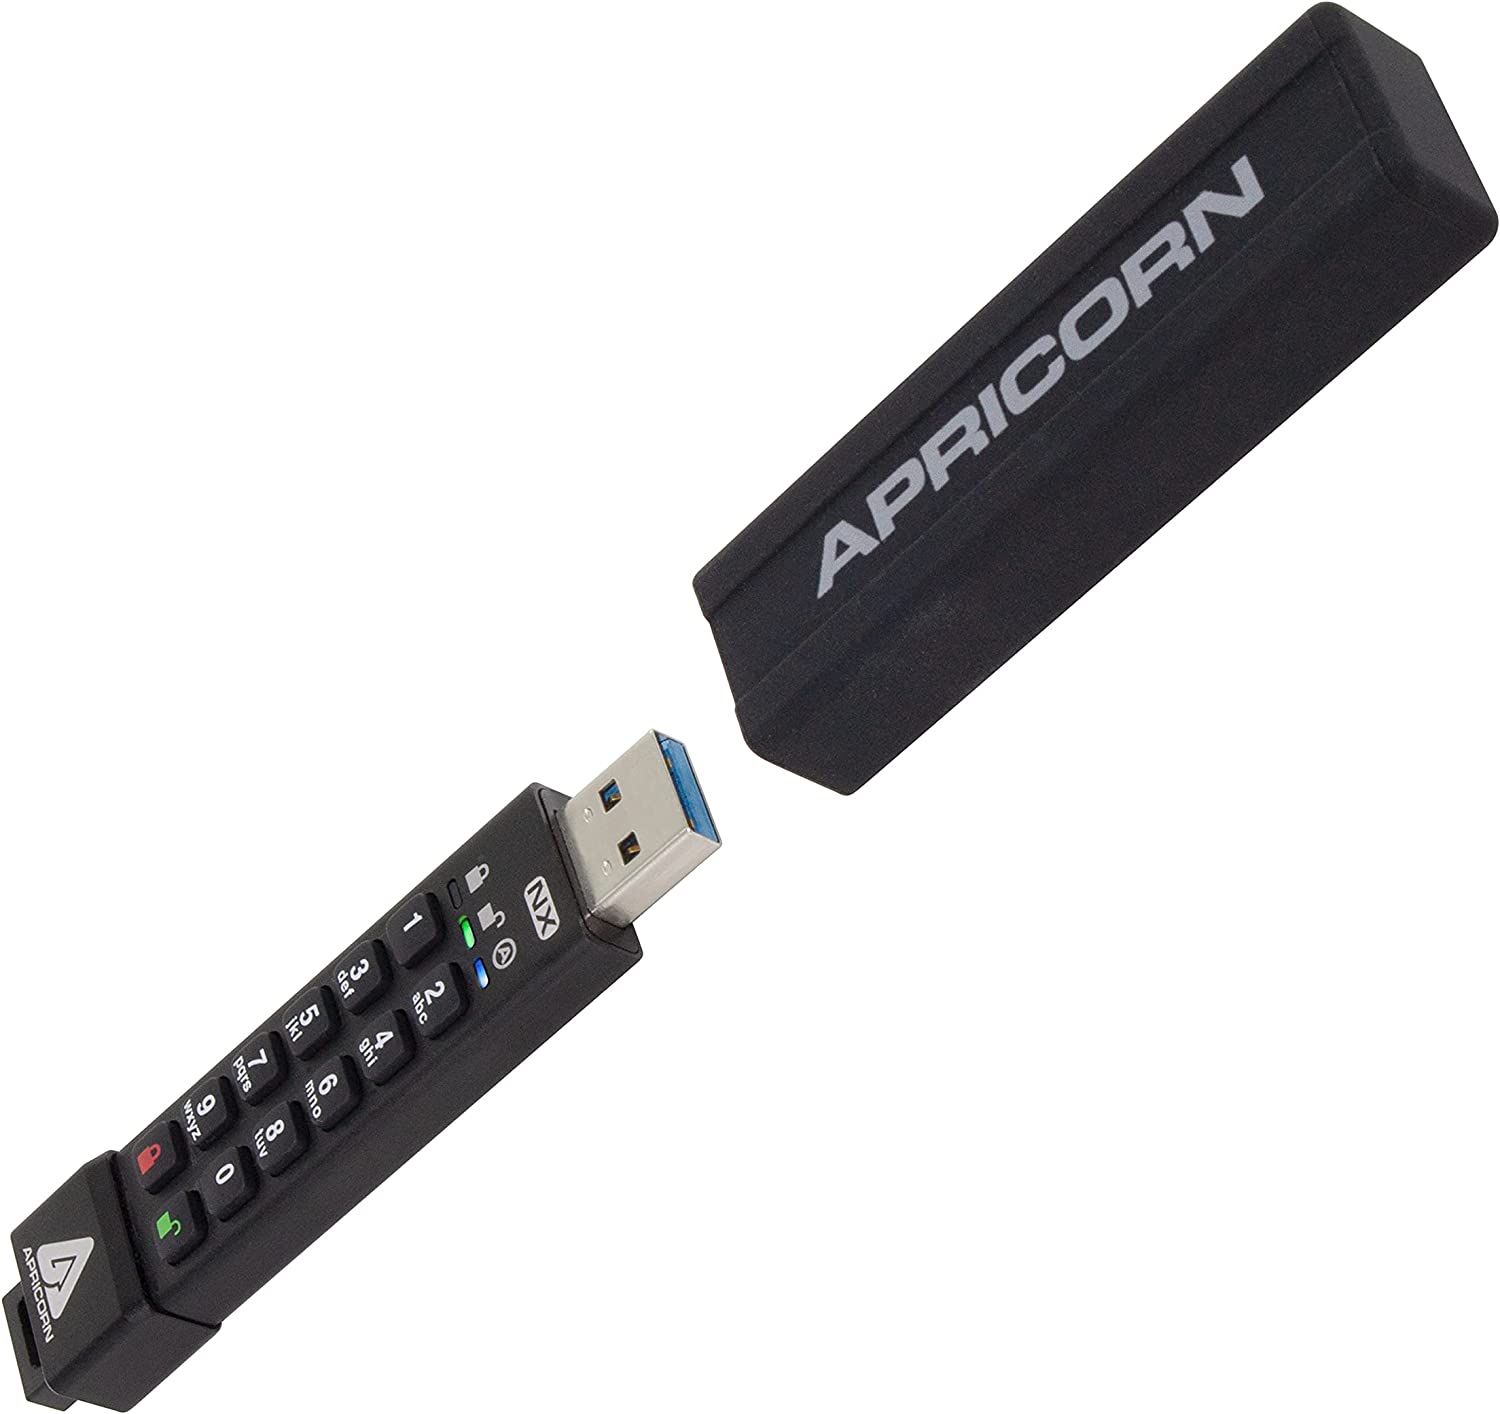 Apricorn Aegis Secure Key 3 NX 64GB 256-bit Encrypted FIPS 140-2 Level 3 Validated Secure USB 3.0 Flash Drive, ASK3-NX-64GB, Black